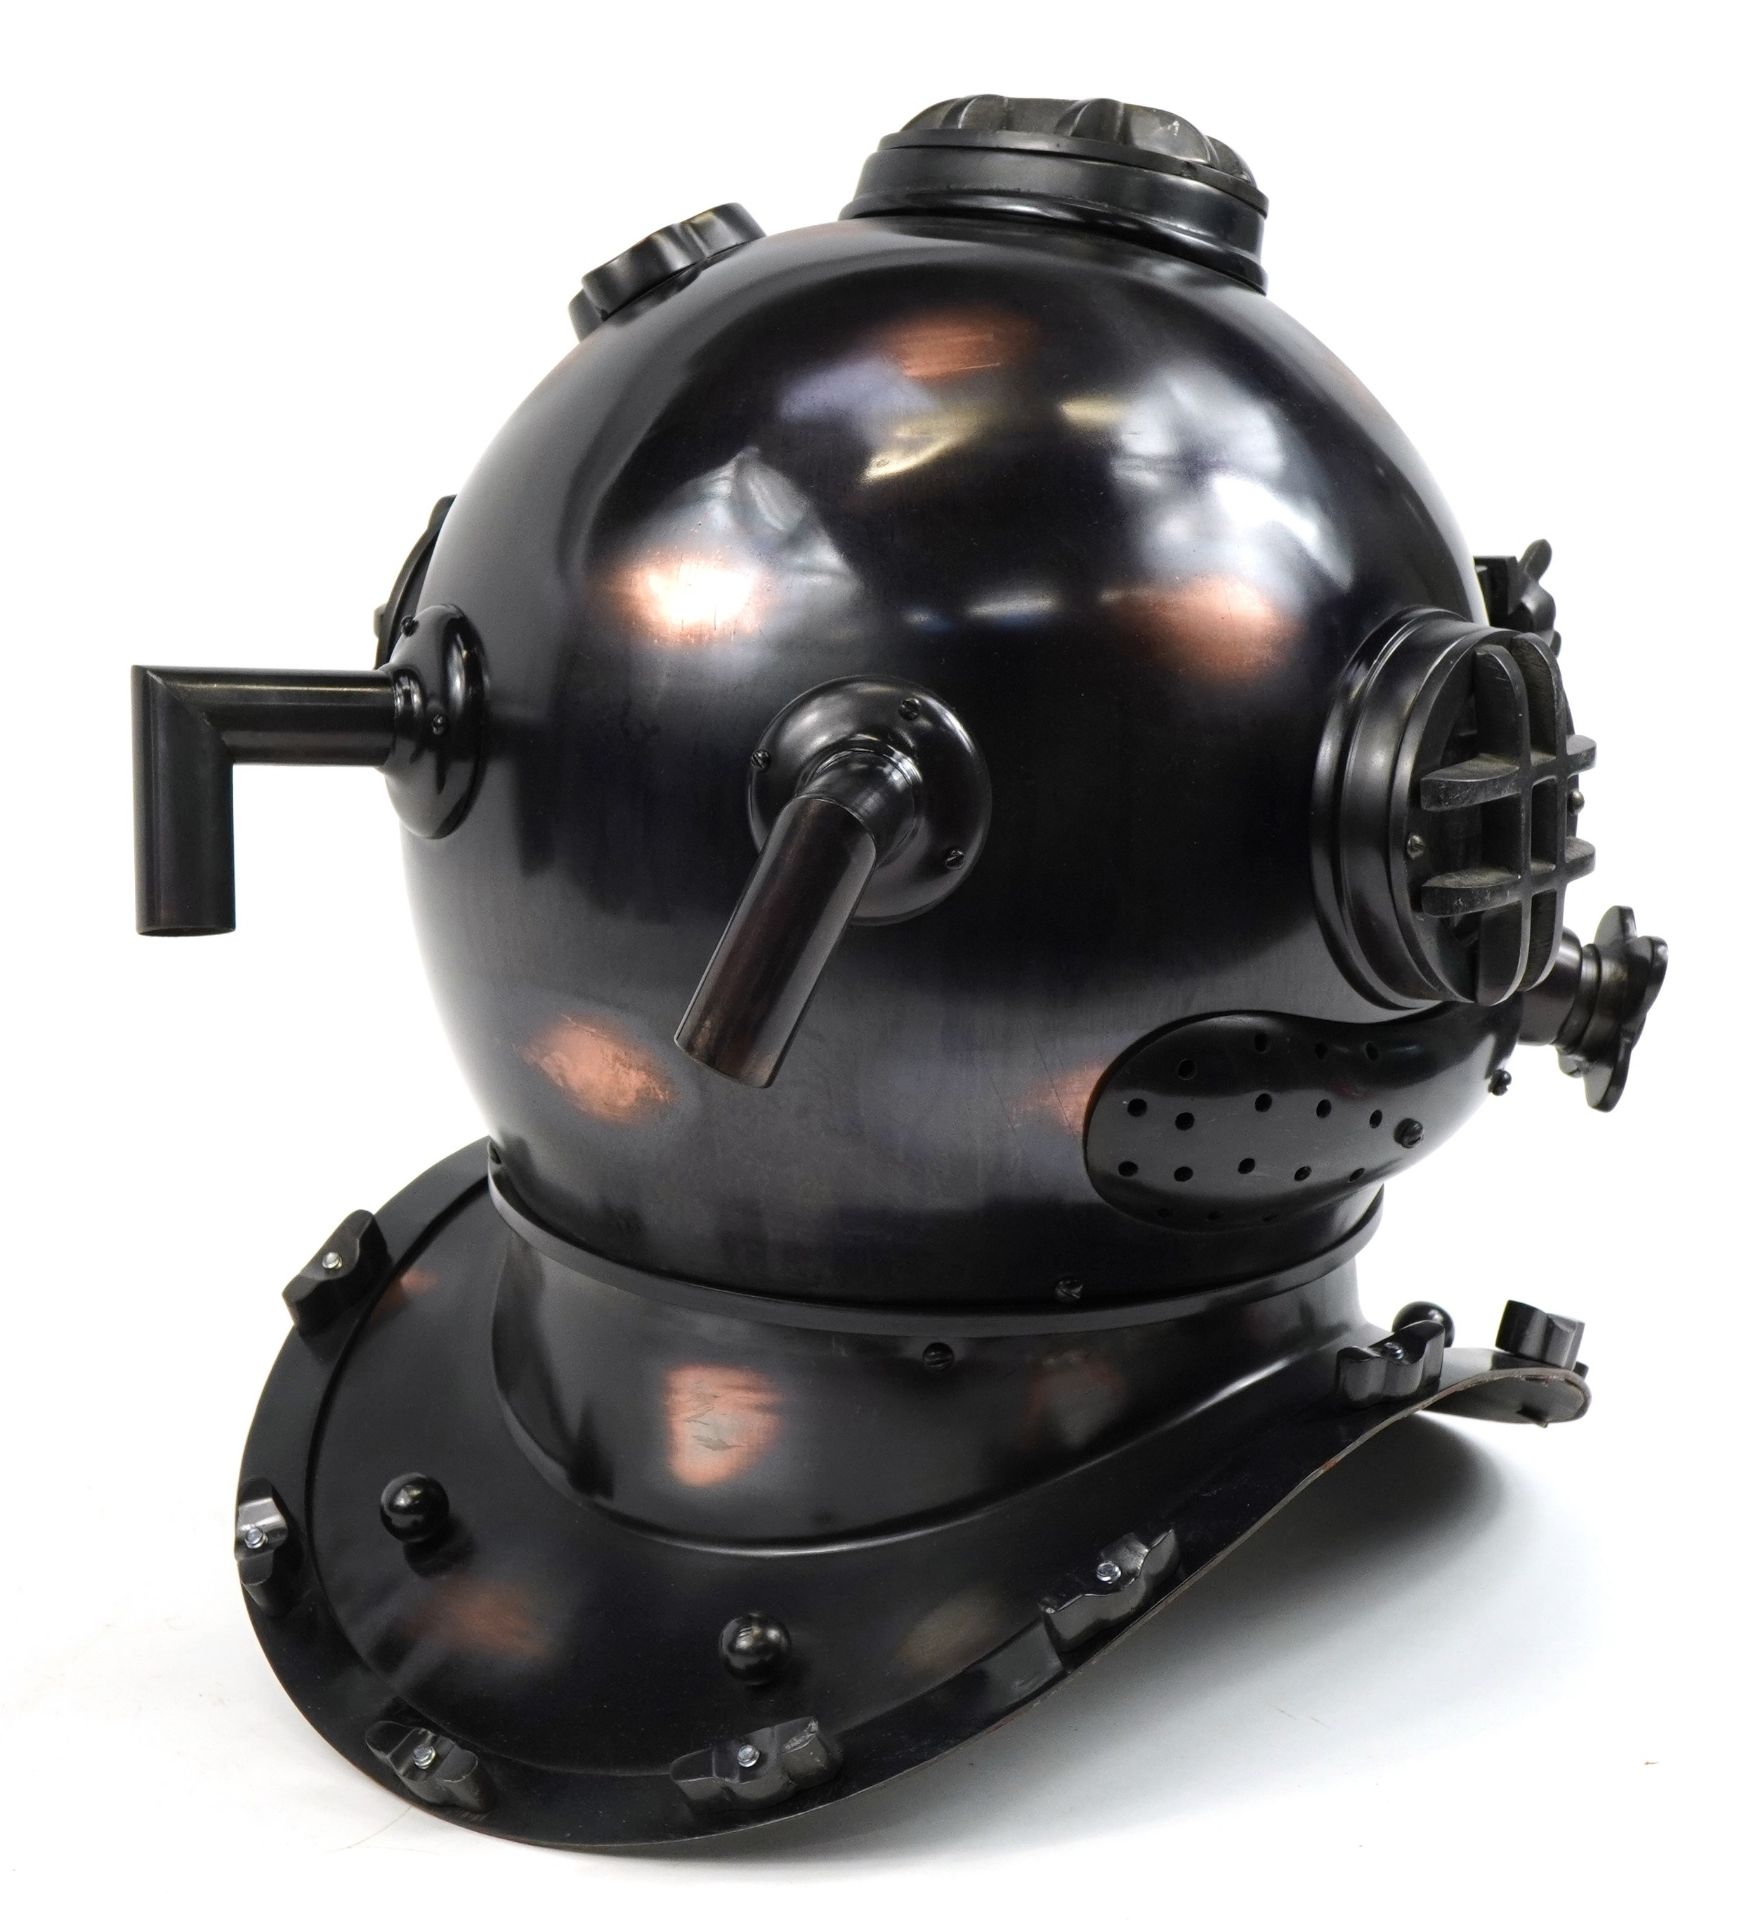 Decorative diver's helmet, 42cm high - Image 3 of 4